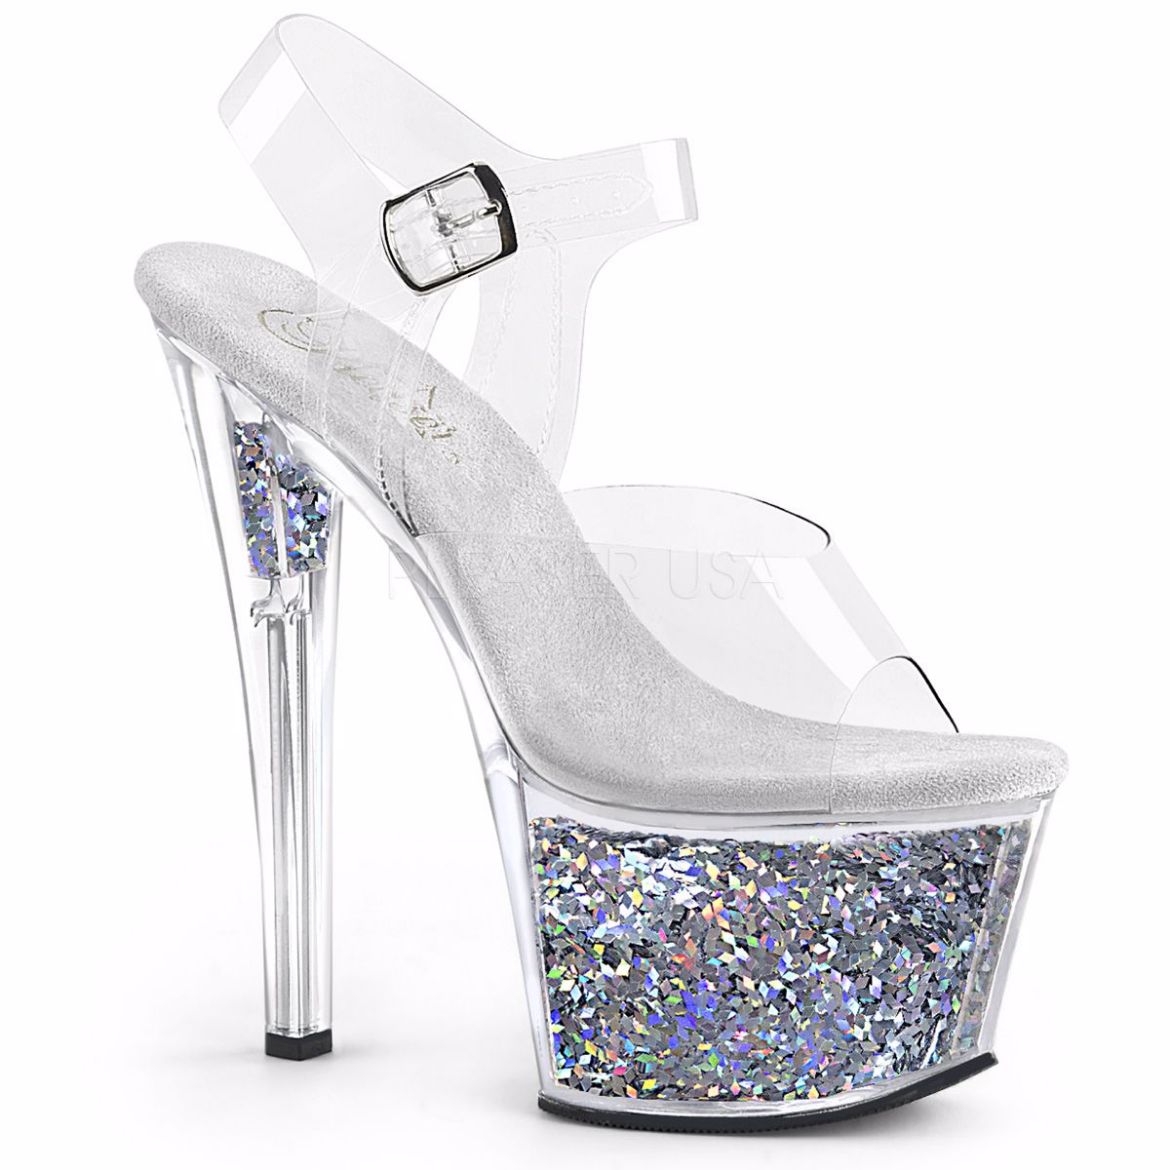 Product image of Pleaser Sky-308Gf Clear/Silver Multi Glitter, 7 inch (17.8 cm) Heel, 2 3/4 inch (7 cm) Platform Sandal Shoes